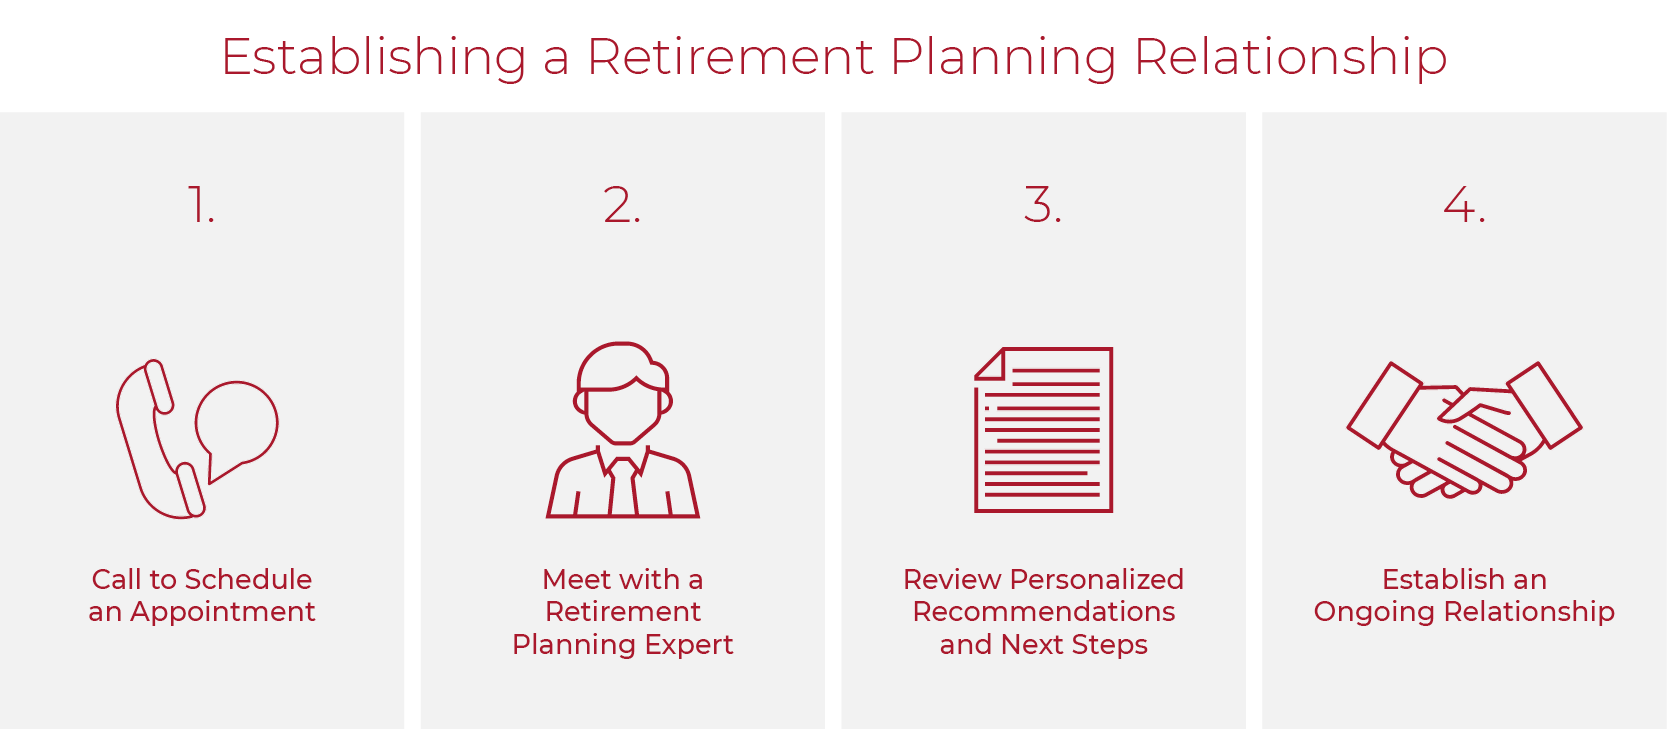 4 steps for establishing a retirement planning relationship